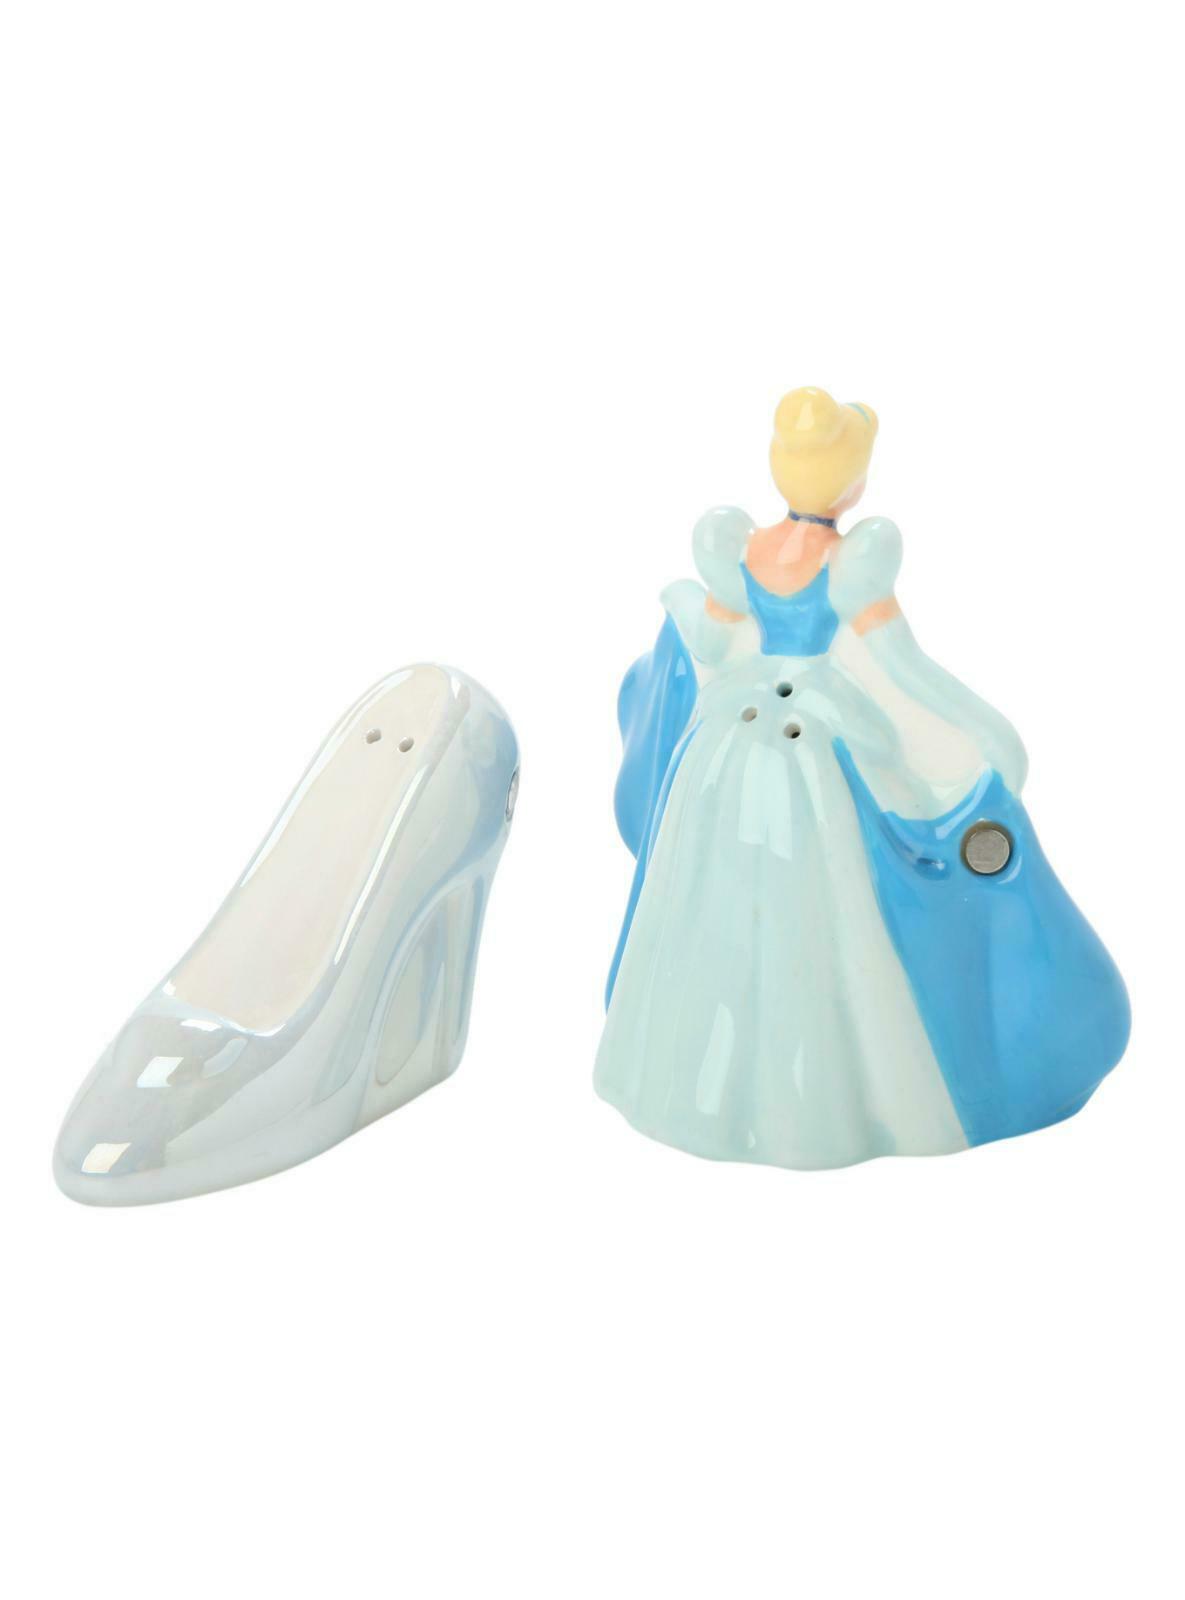 Disney's Cinderella & Slipper Salt & Pepper Shakers